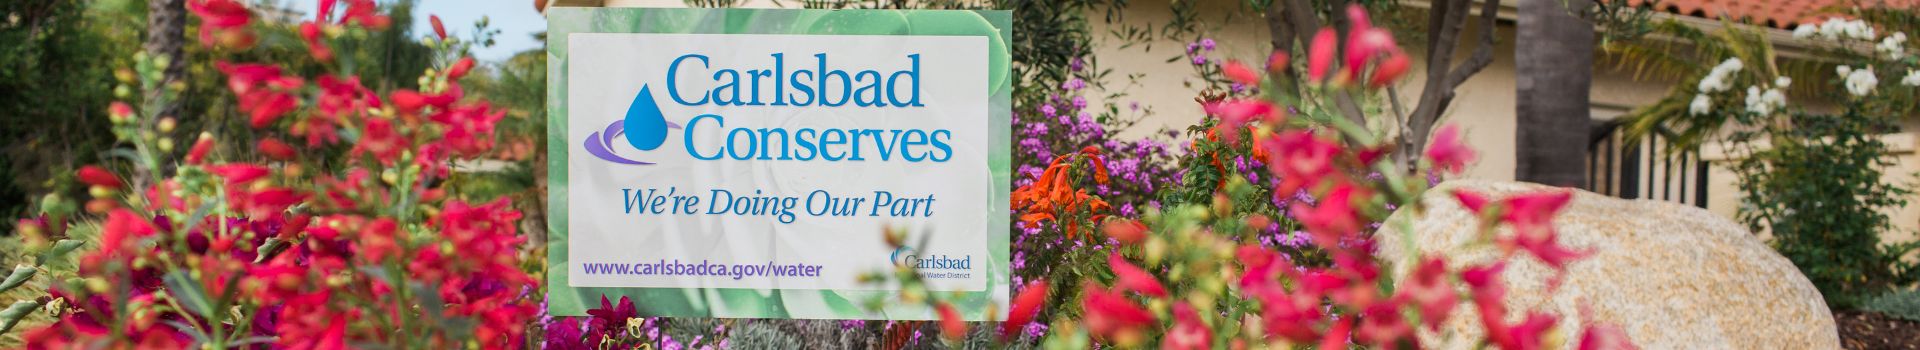 Carlsbad Conserves sign